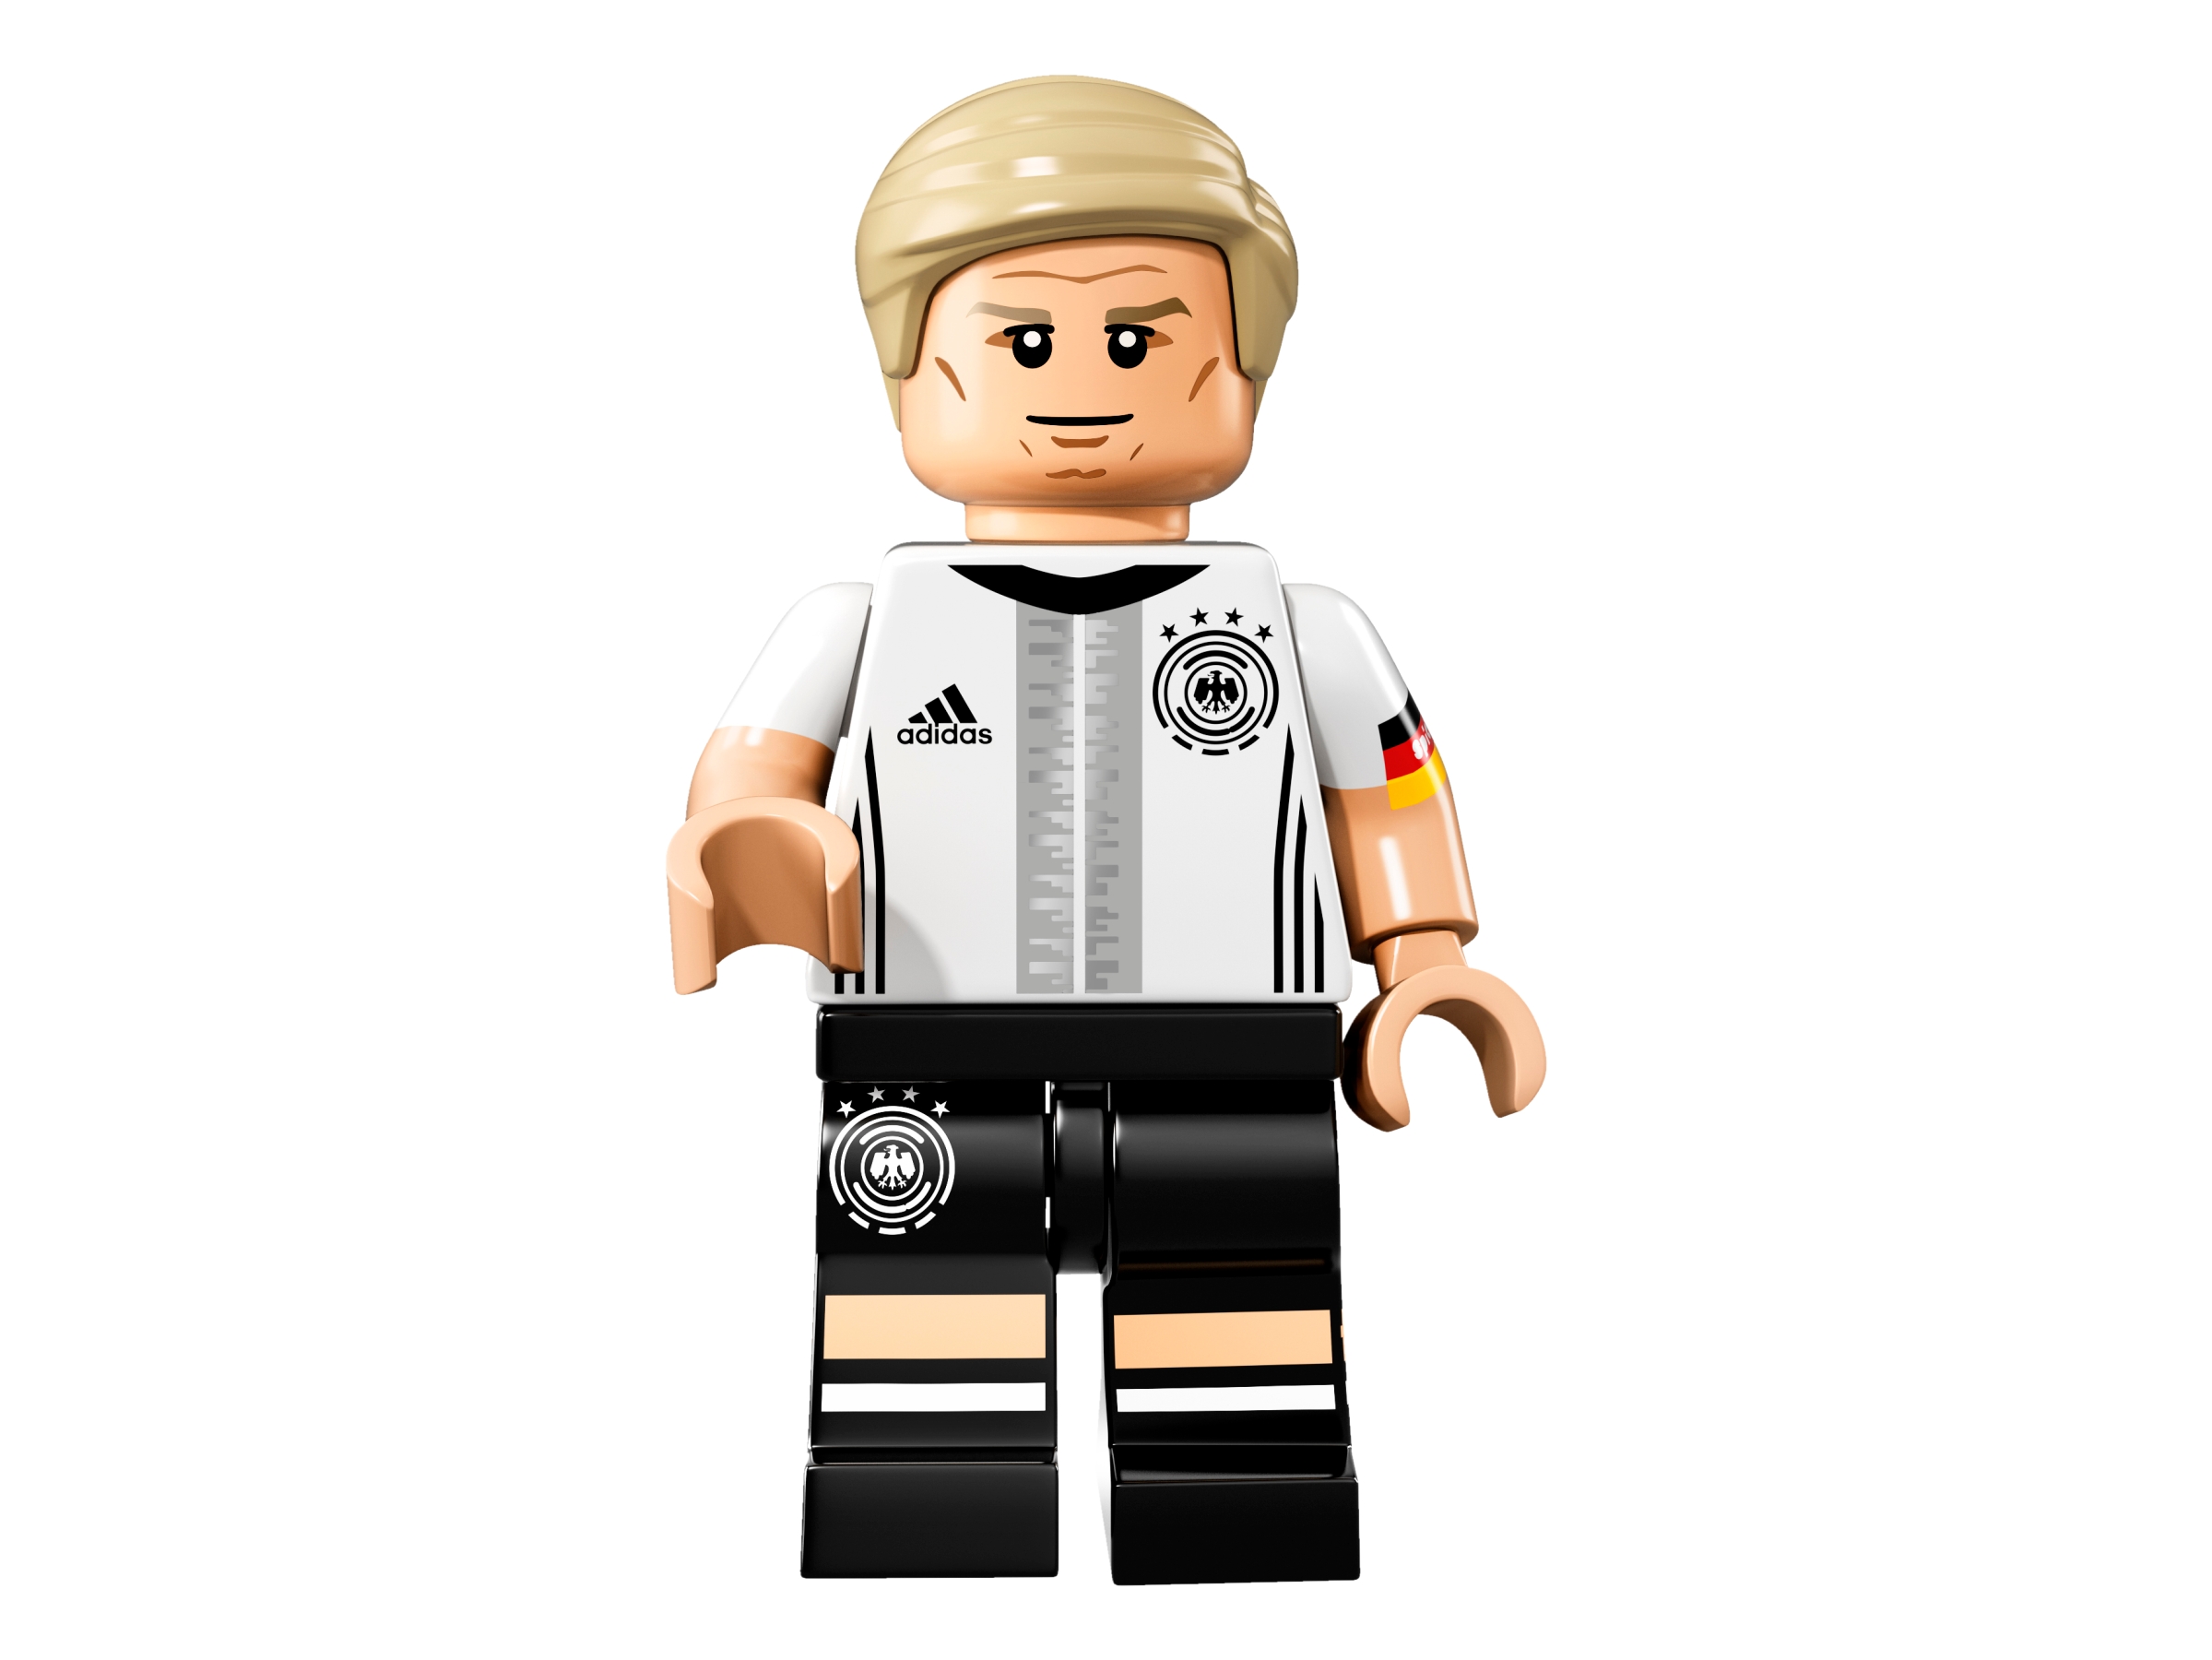 Lego DFB série allemande de football équipe Minifigures 